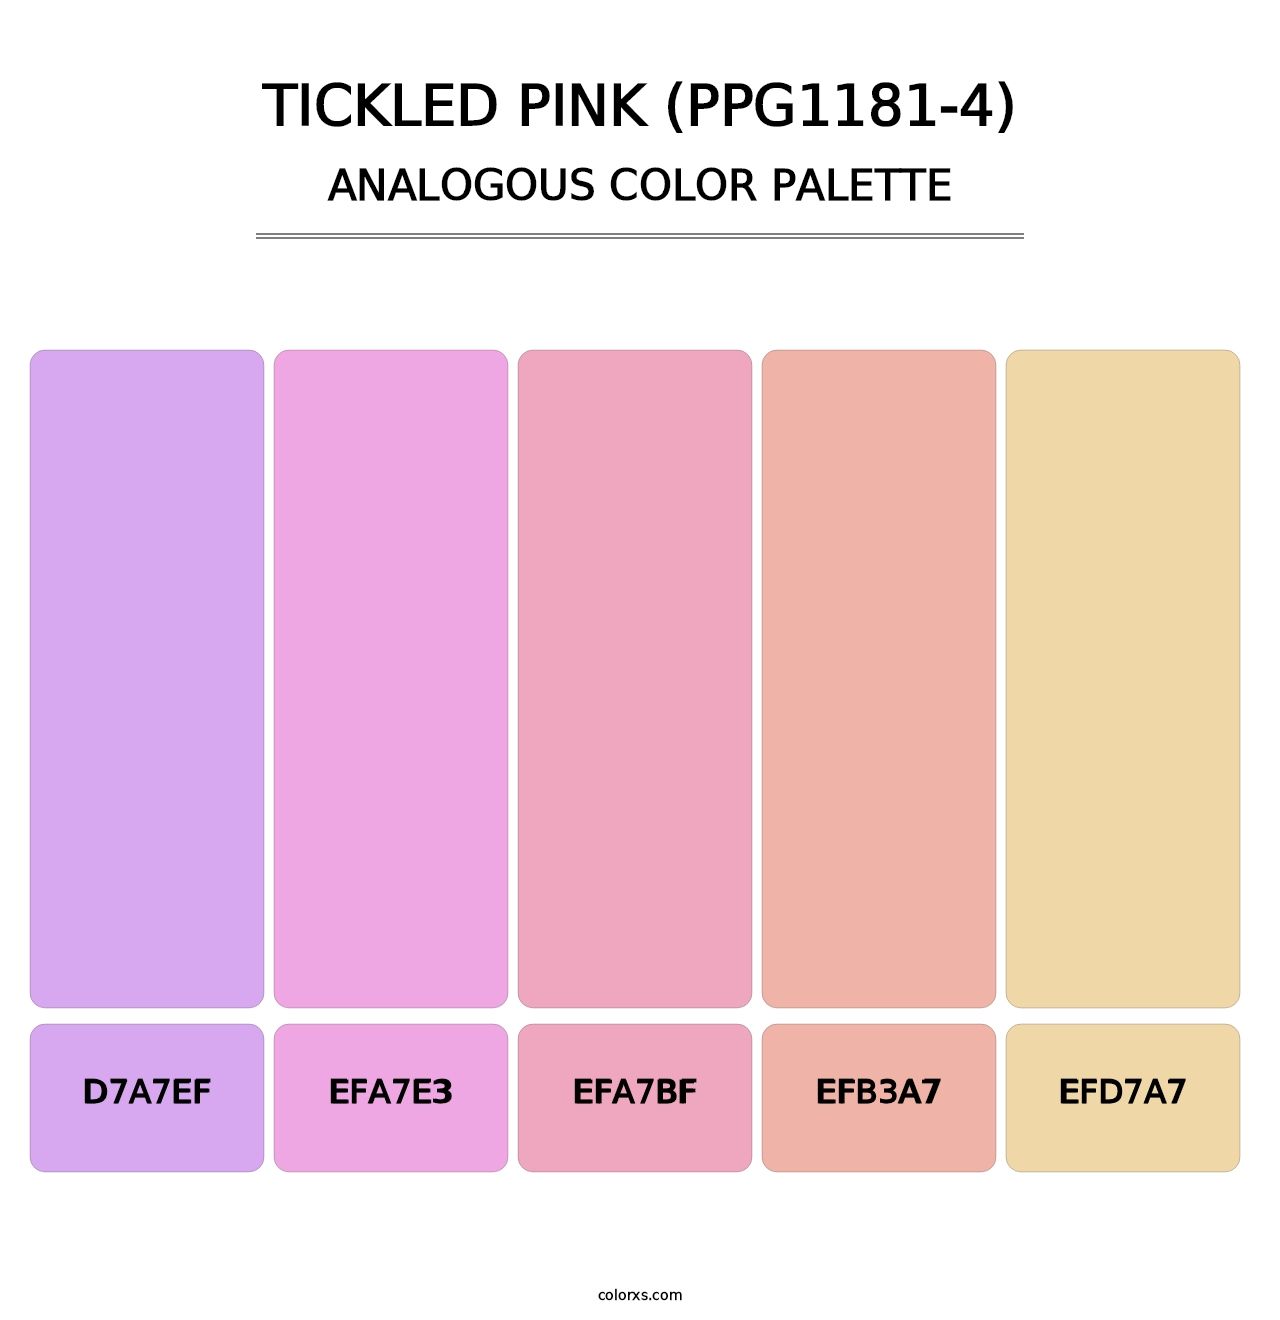 Tickled Pink (PPG1181-4) - Analogous Color Palette